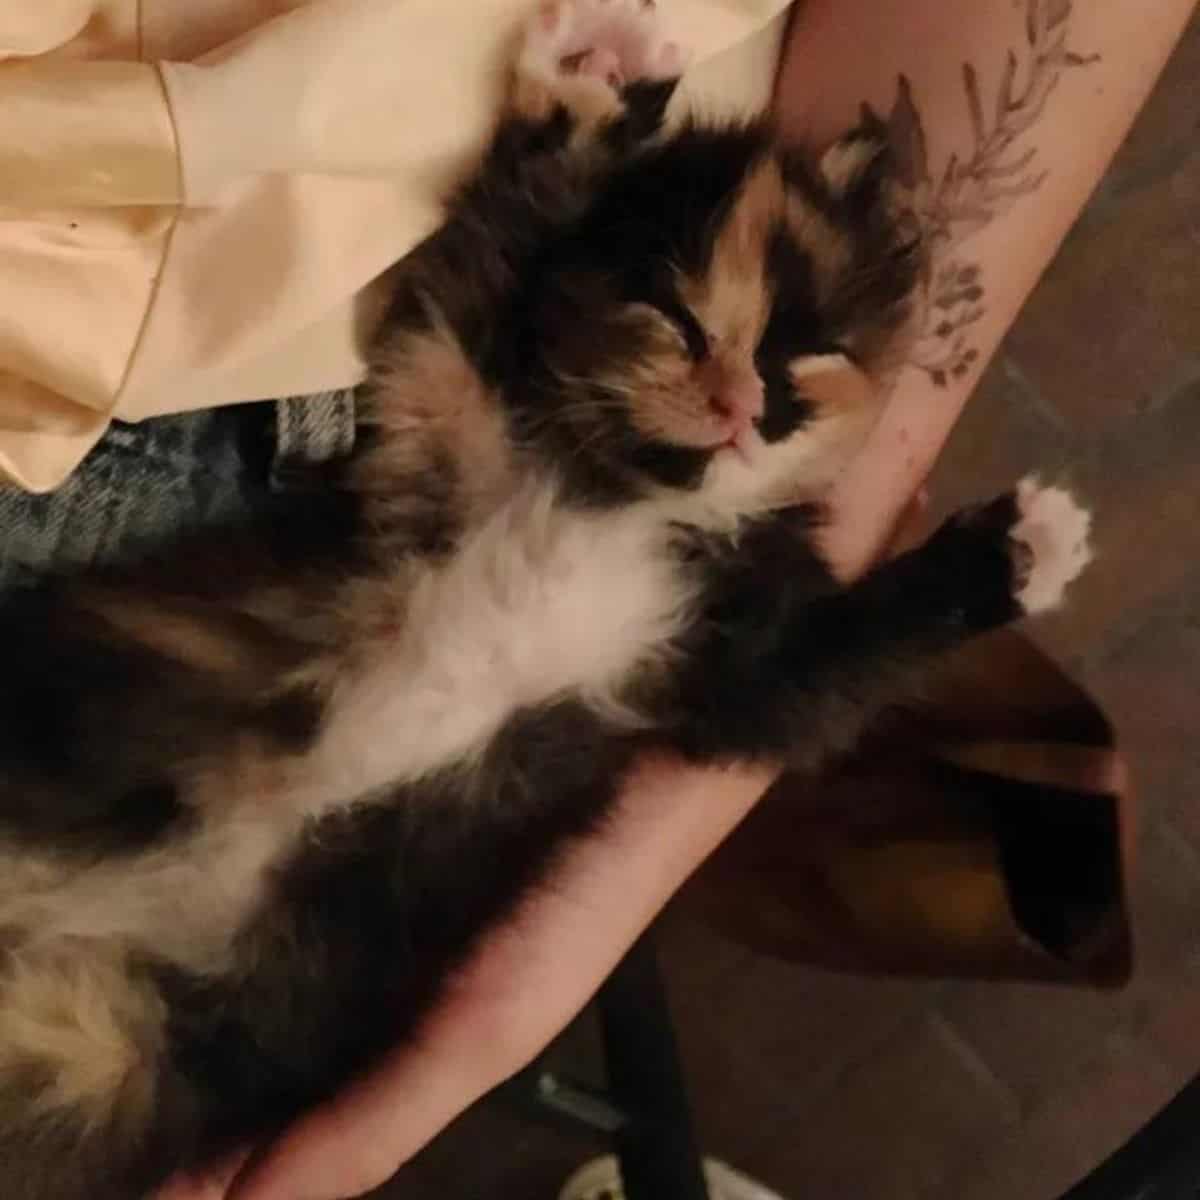 adopted kitten sleeps on woman's arm